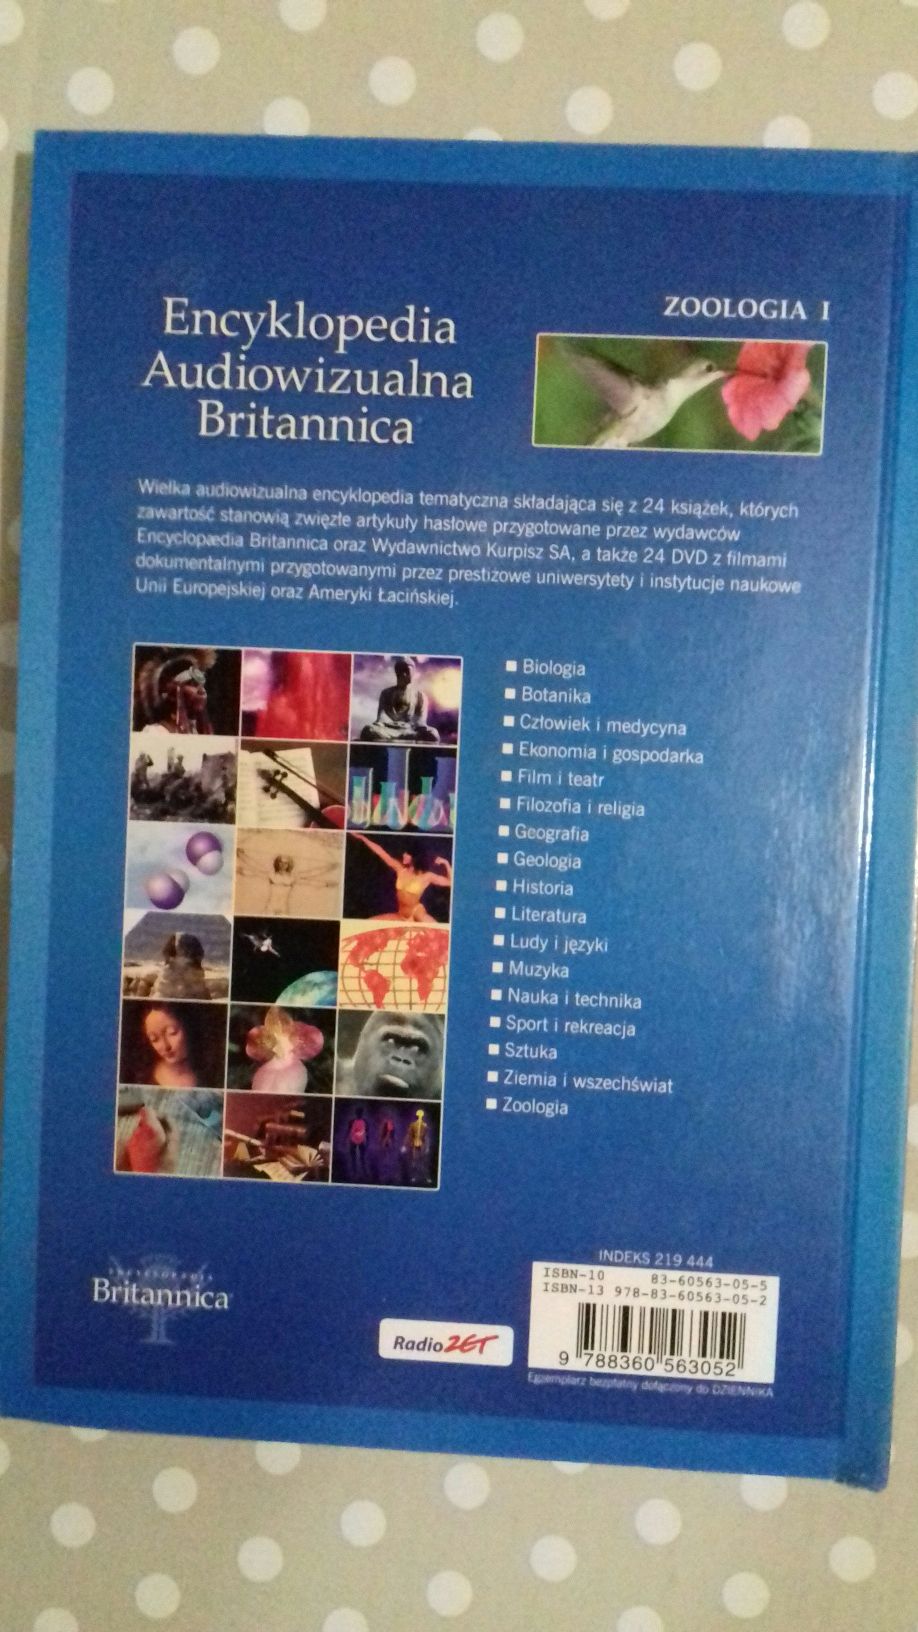 Encyklopedia Audiowizualna Britannica "zoologia"